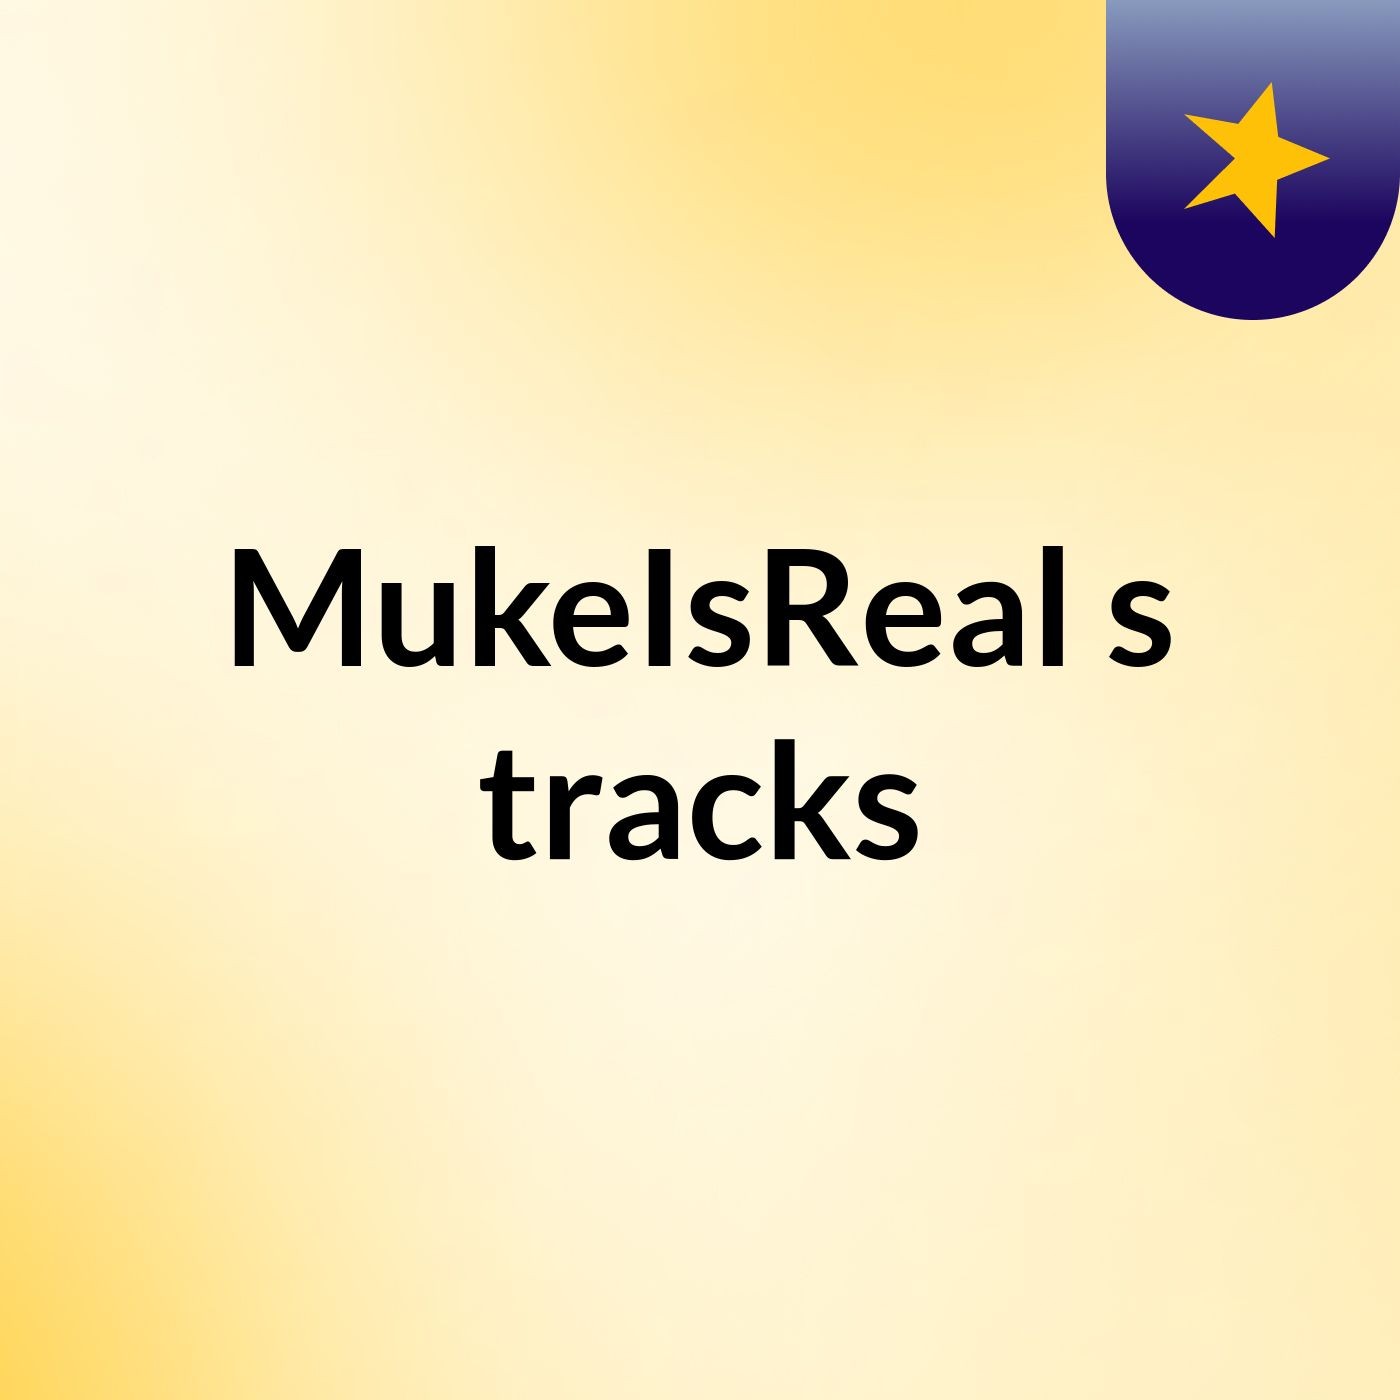 MukeIsReal's tracks